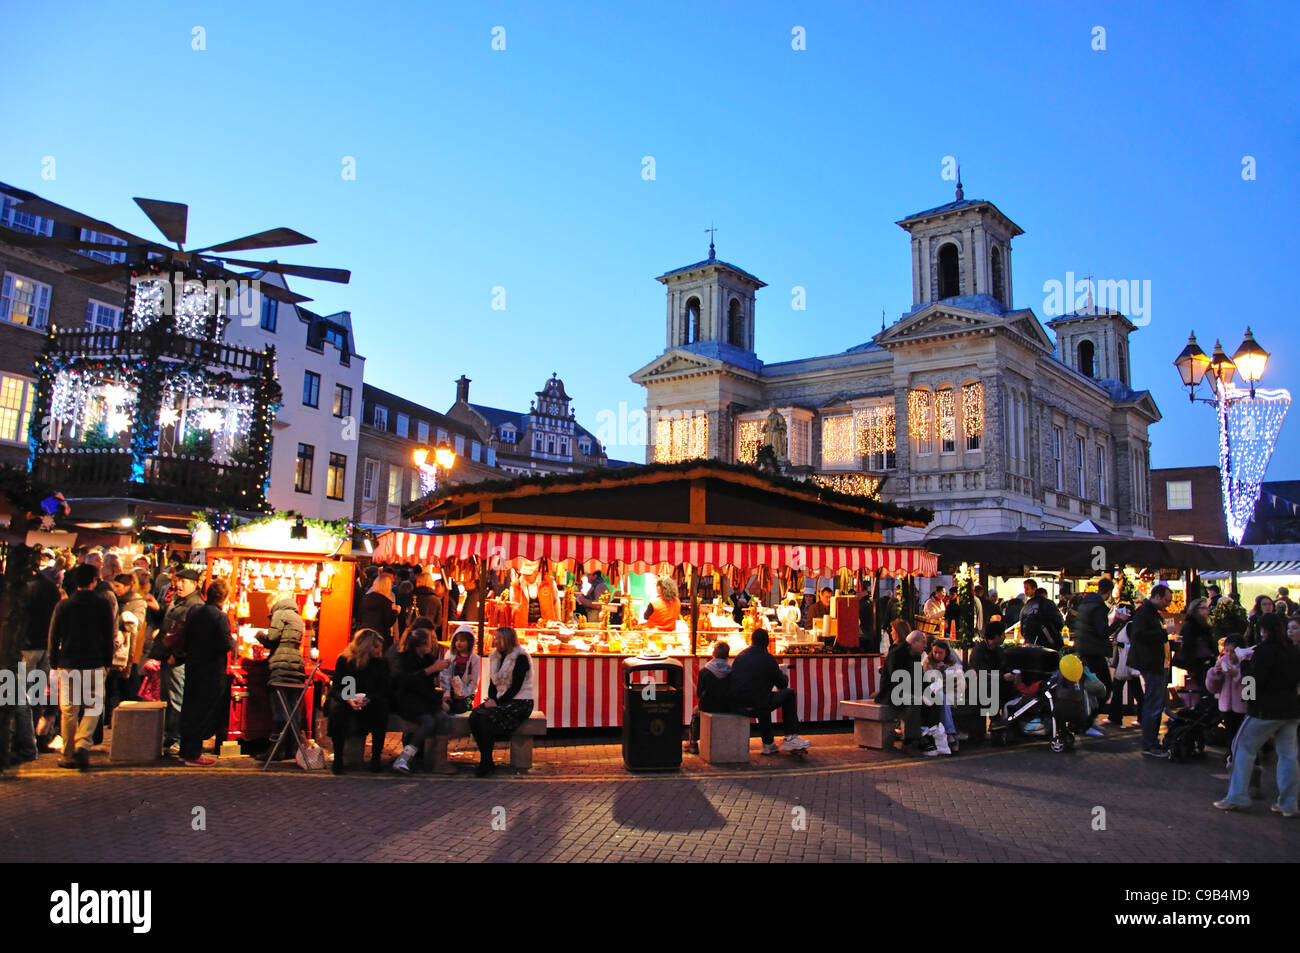 German Christmas Market at dusk, Market Square, Kingston upon Thames, Royal Borough of Kingston upon Thames, Greater London, England, United Kingdom Stock Photo